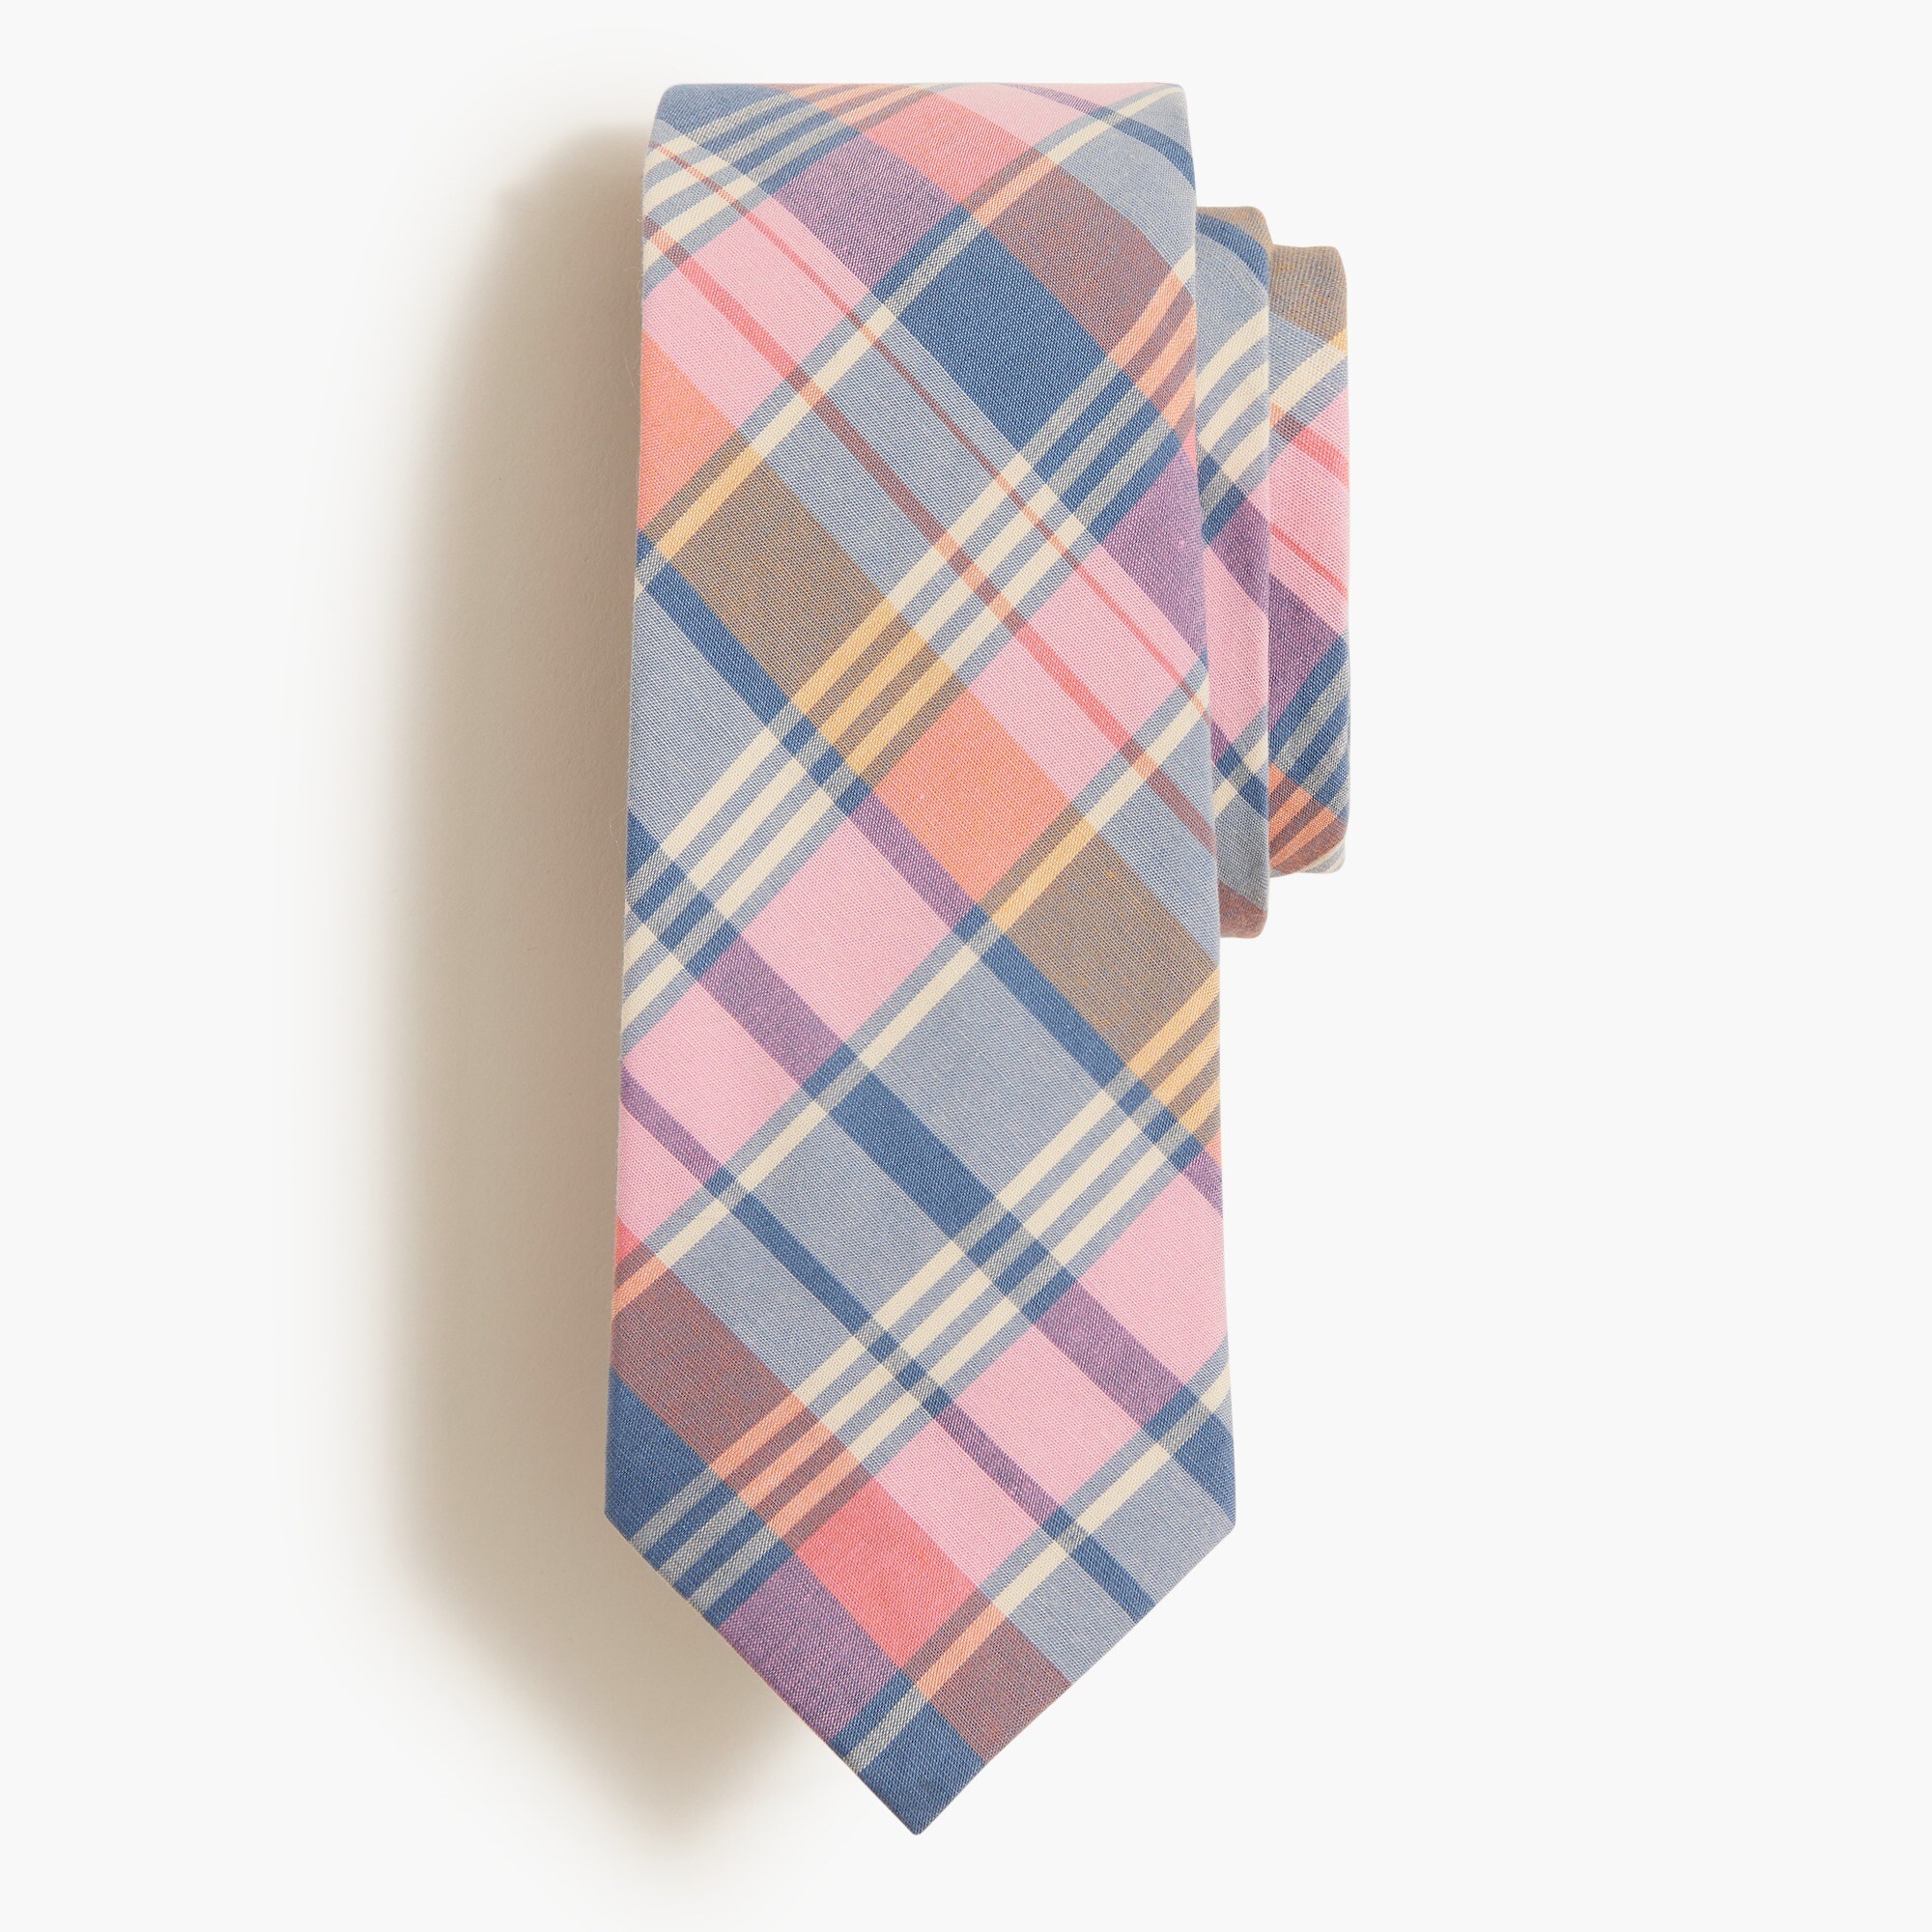  Mixed-plaid tie